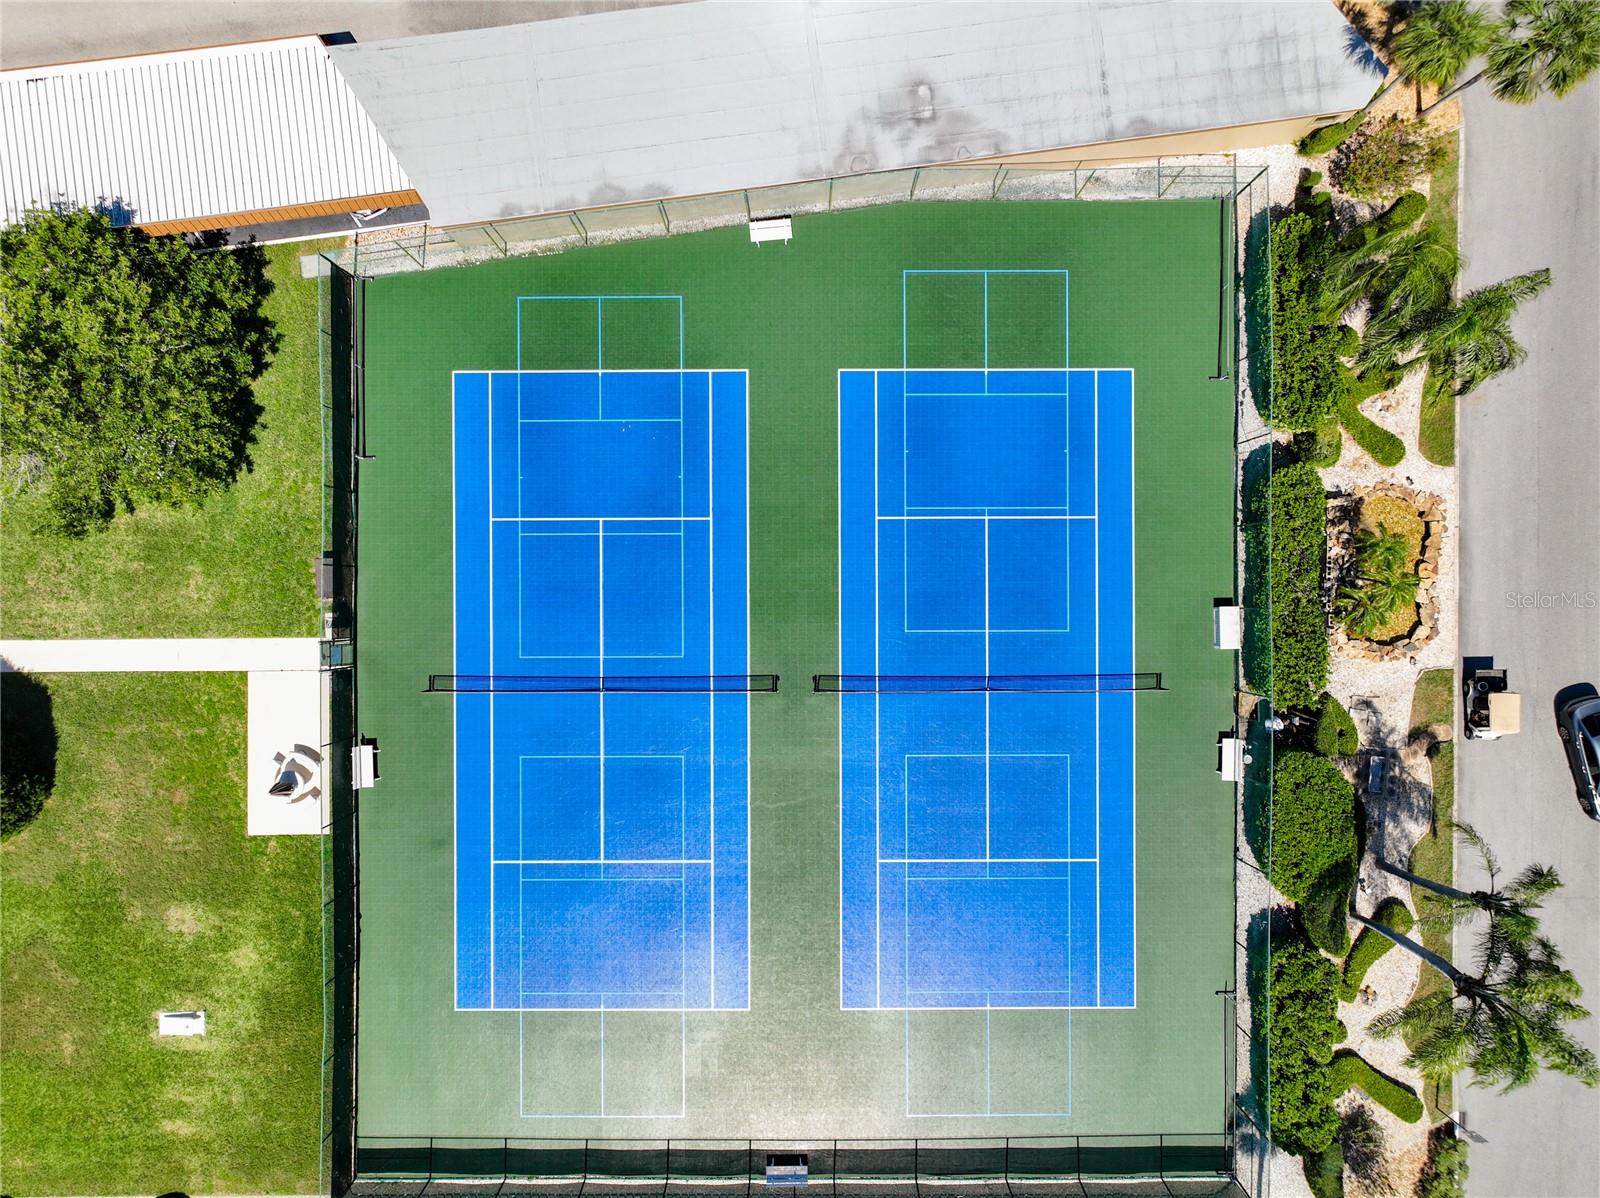 Community Tennis/ Pickleball courts